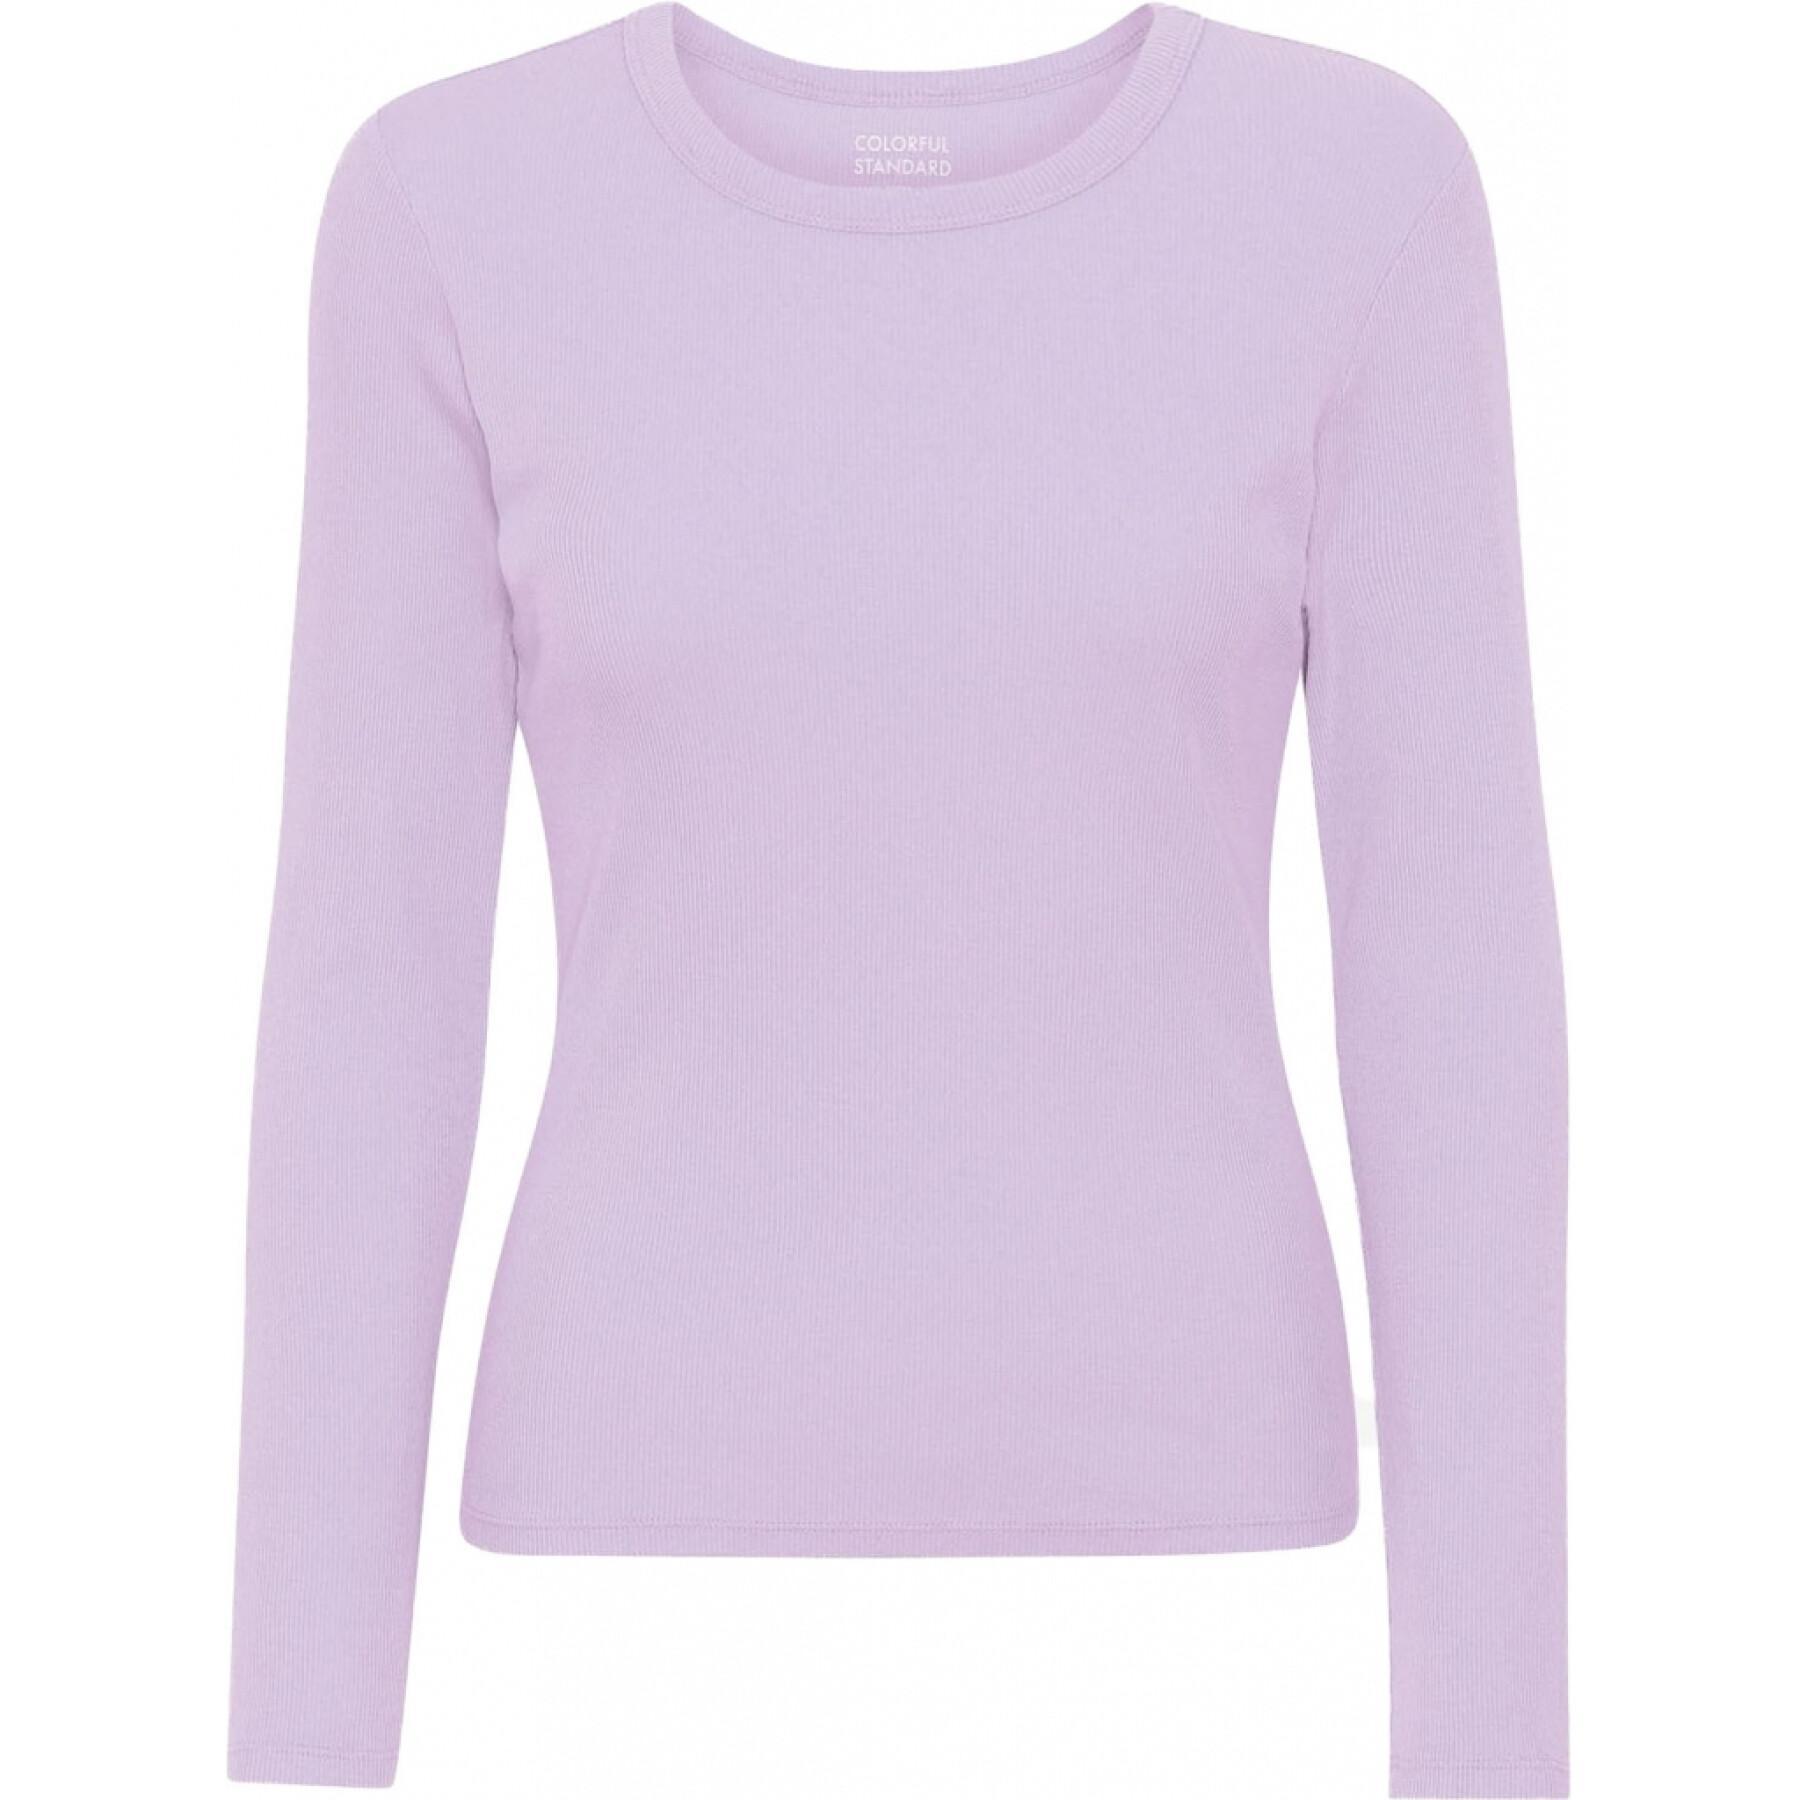 Camiseta de manga larga para mujer Colorful Standard Organic soft lavender